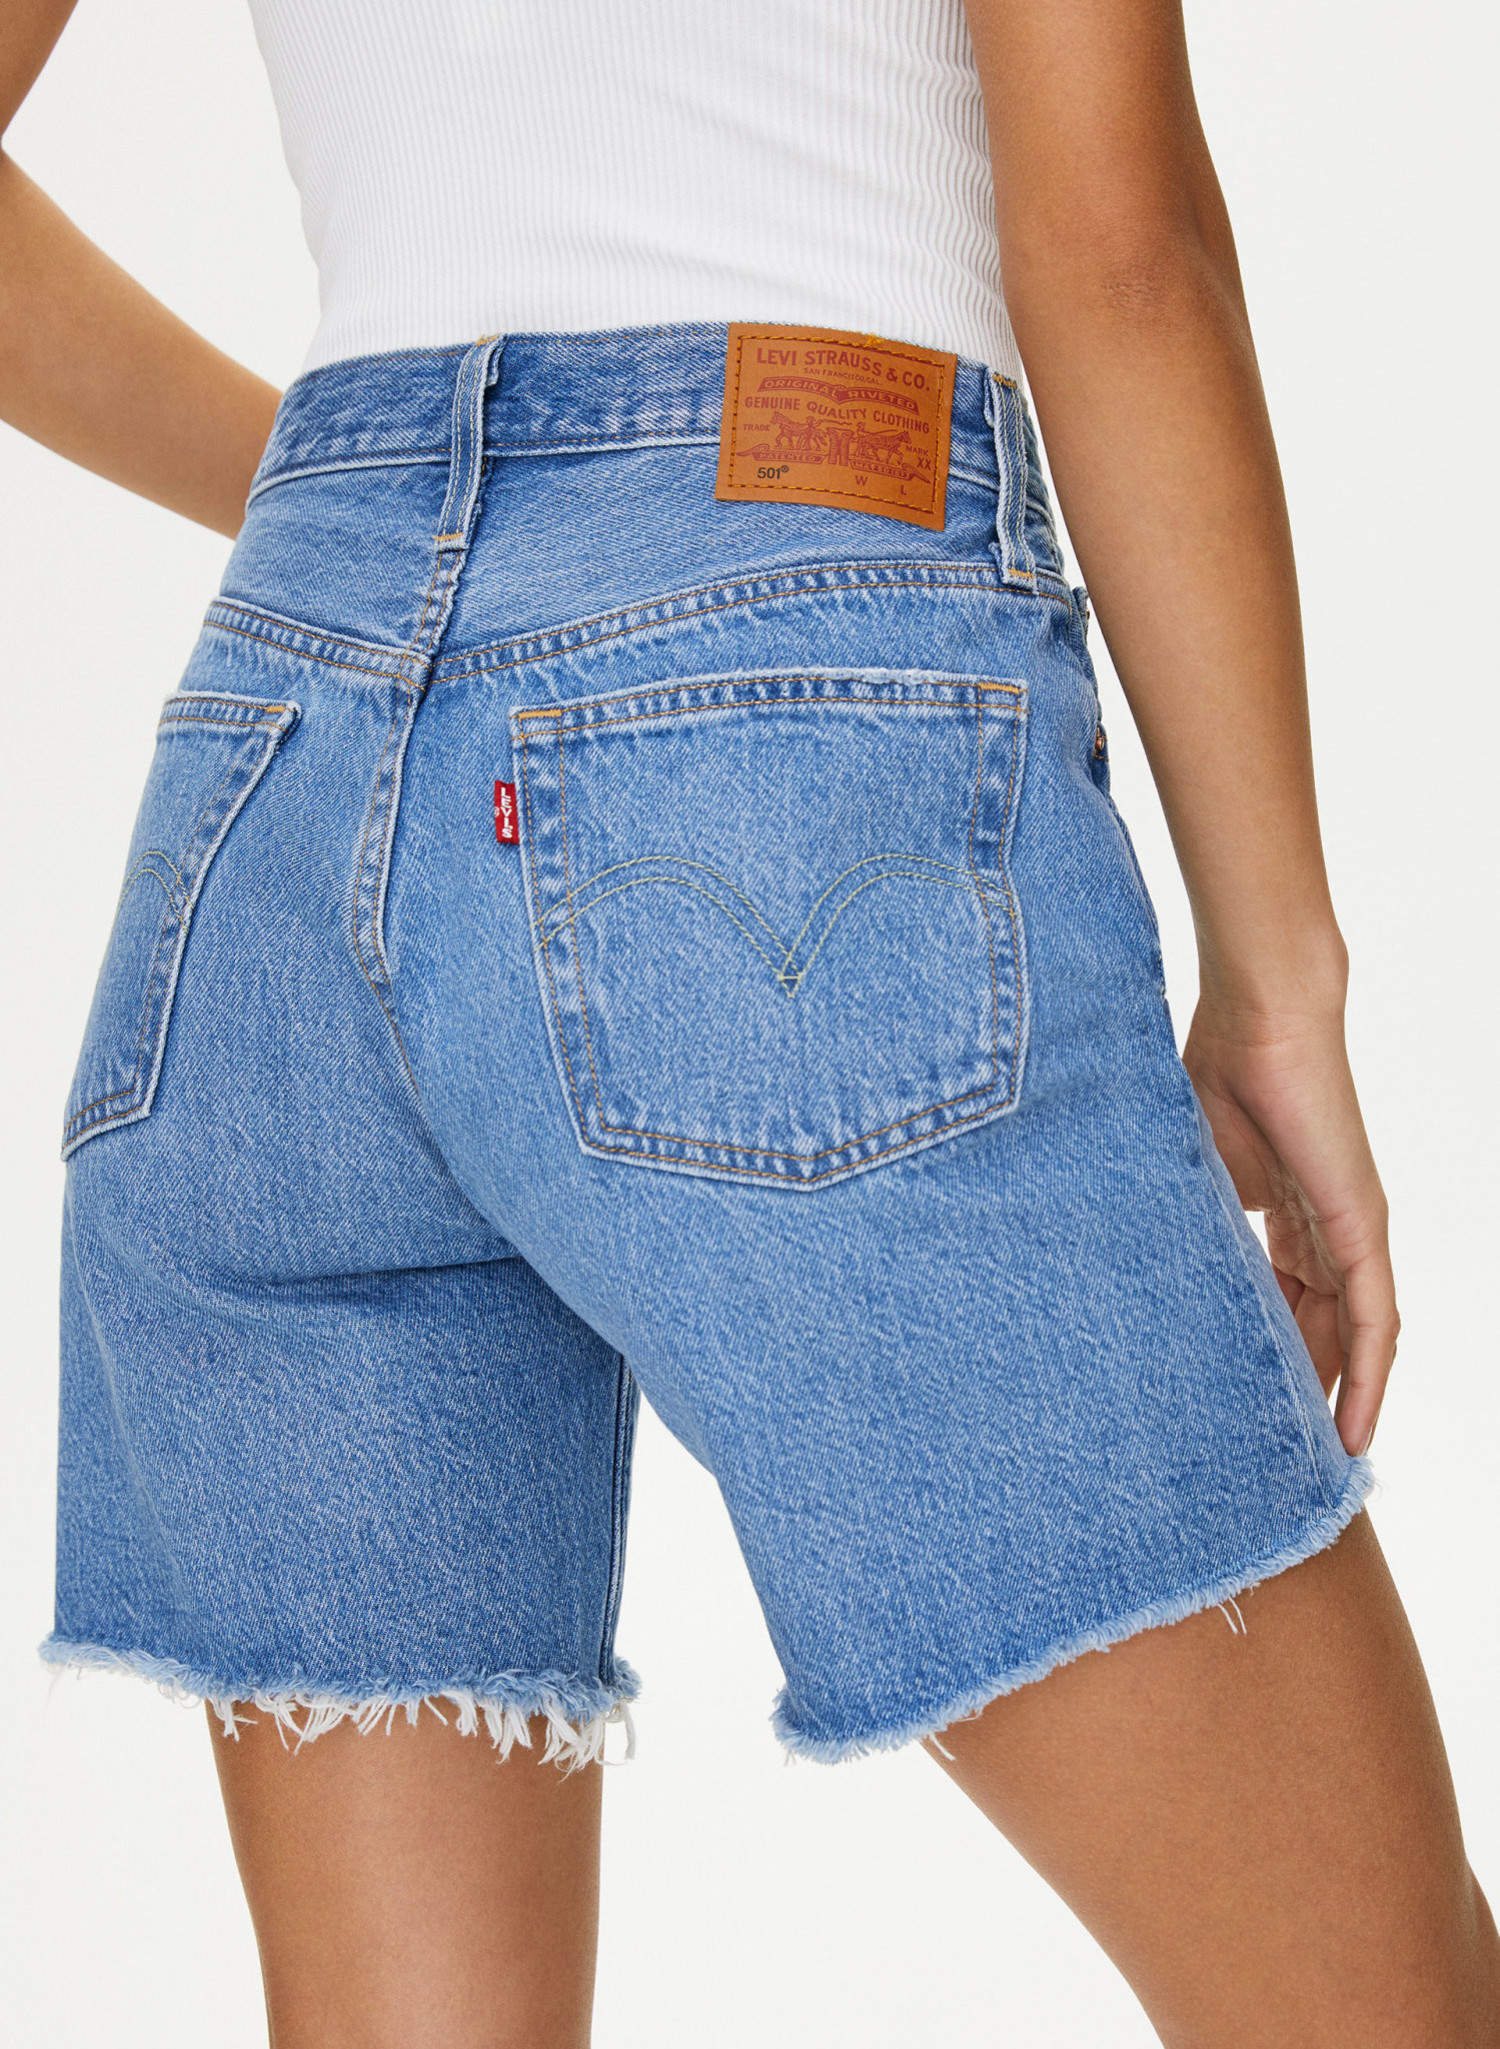 Levi's® Premium 501® Mid-Thigh Short - Women's Shorts in Charleston Picks